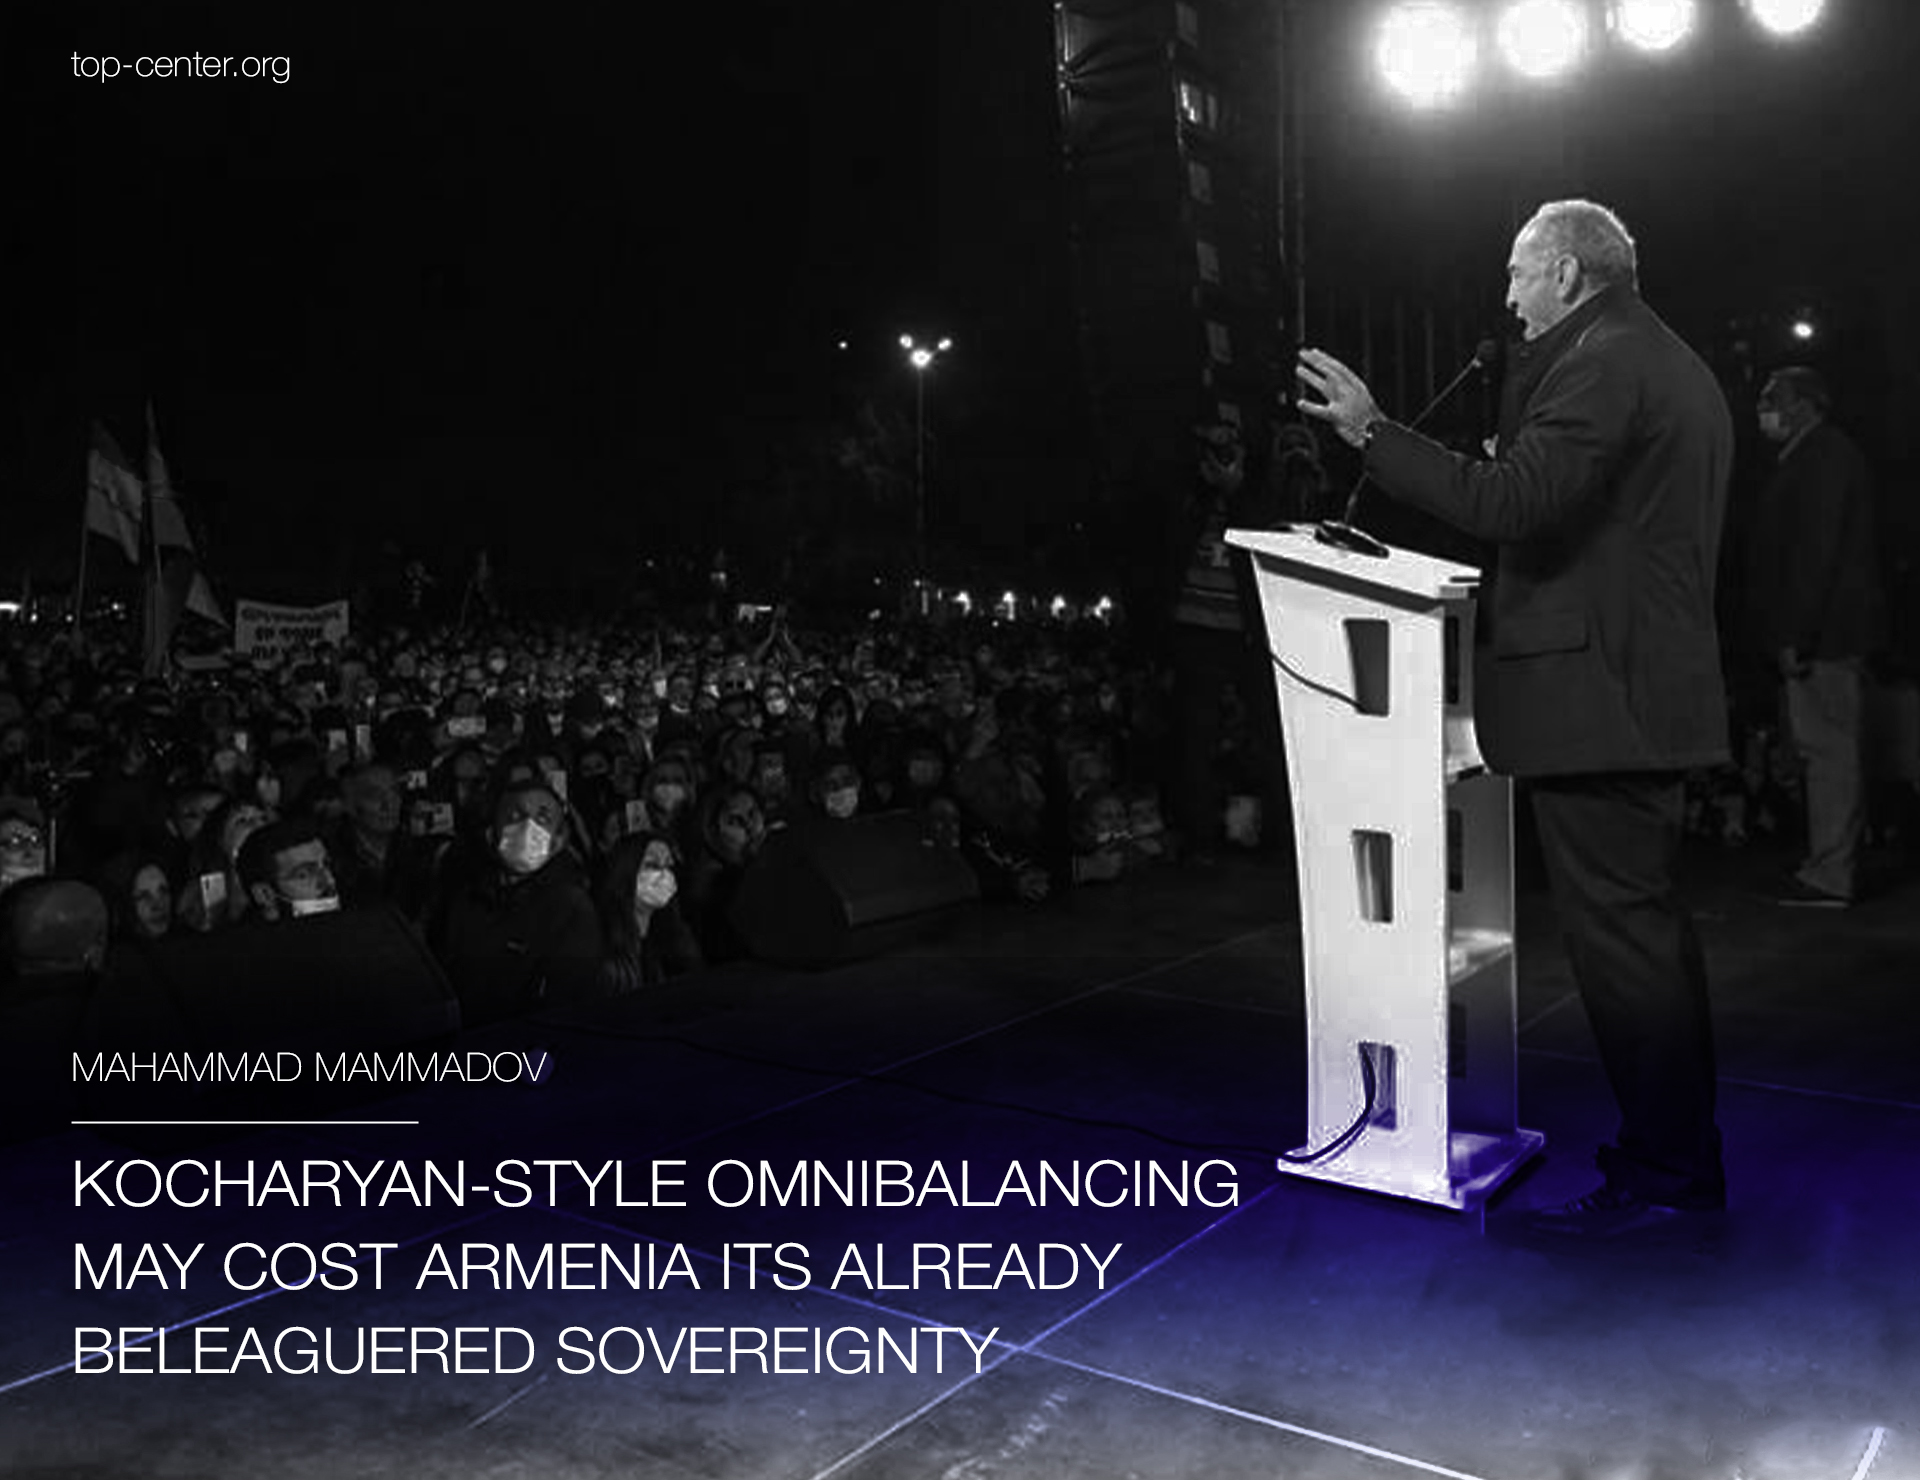 Kocharyan-style omnibalancing may cost Armenia its already beleaguered sovereignty